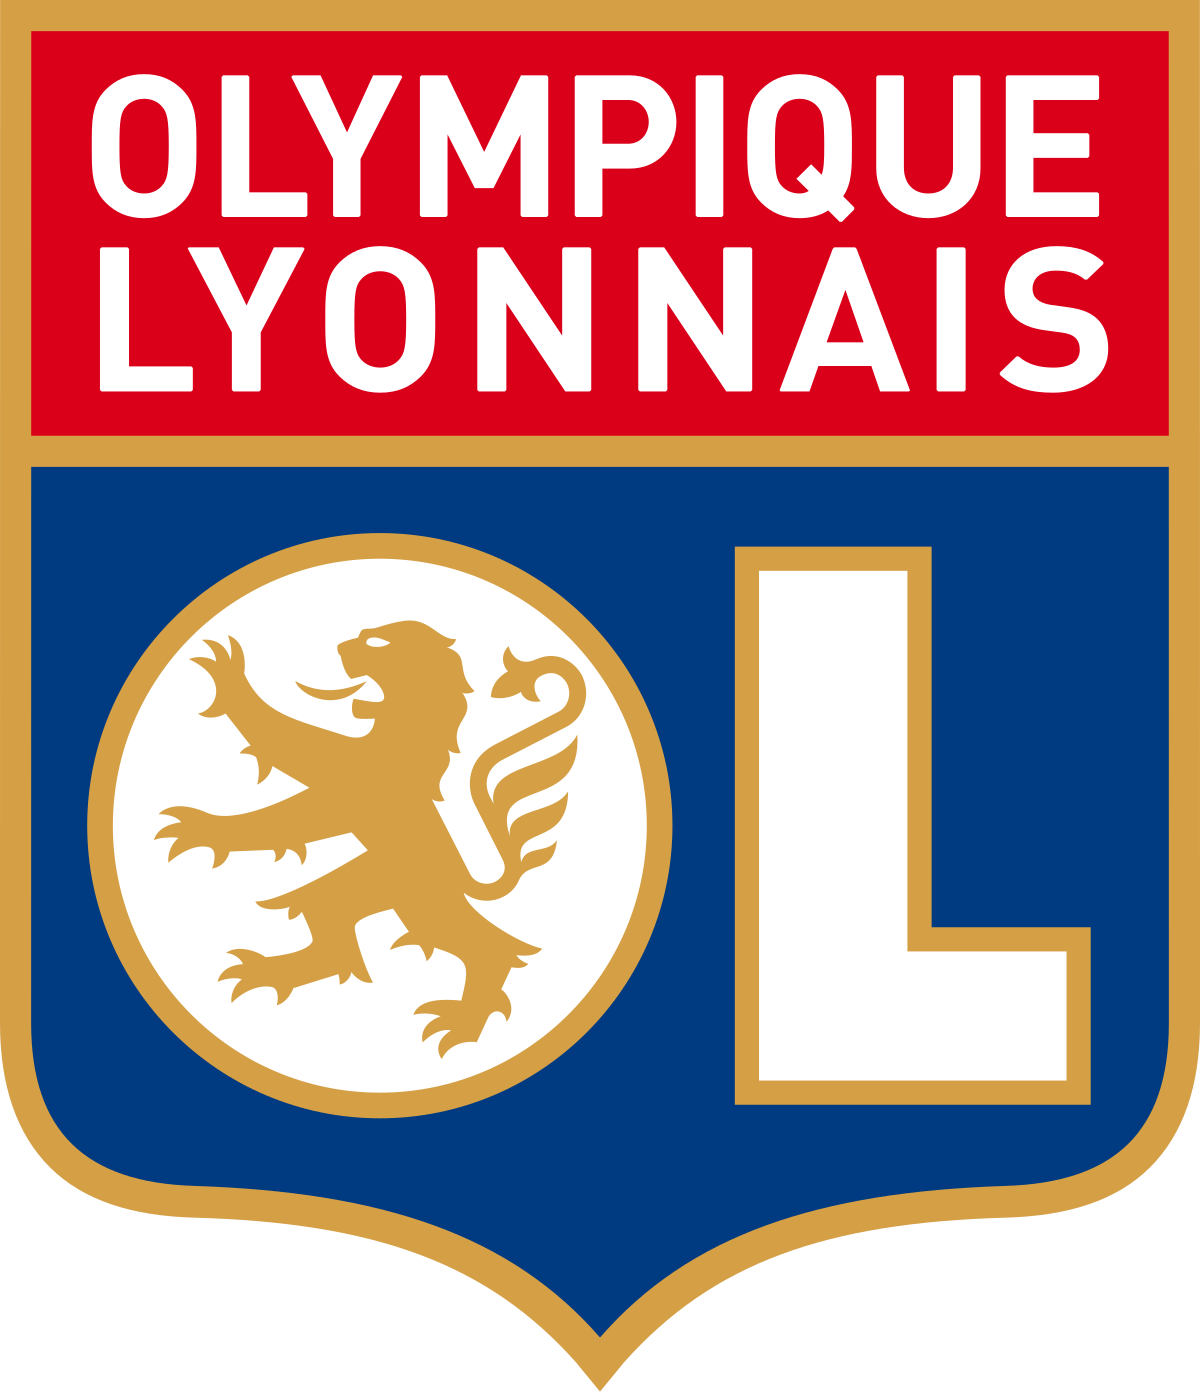 Olympique Lyonnais - Wikipedia bahasa Indonesia ...